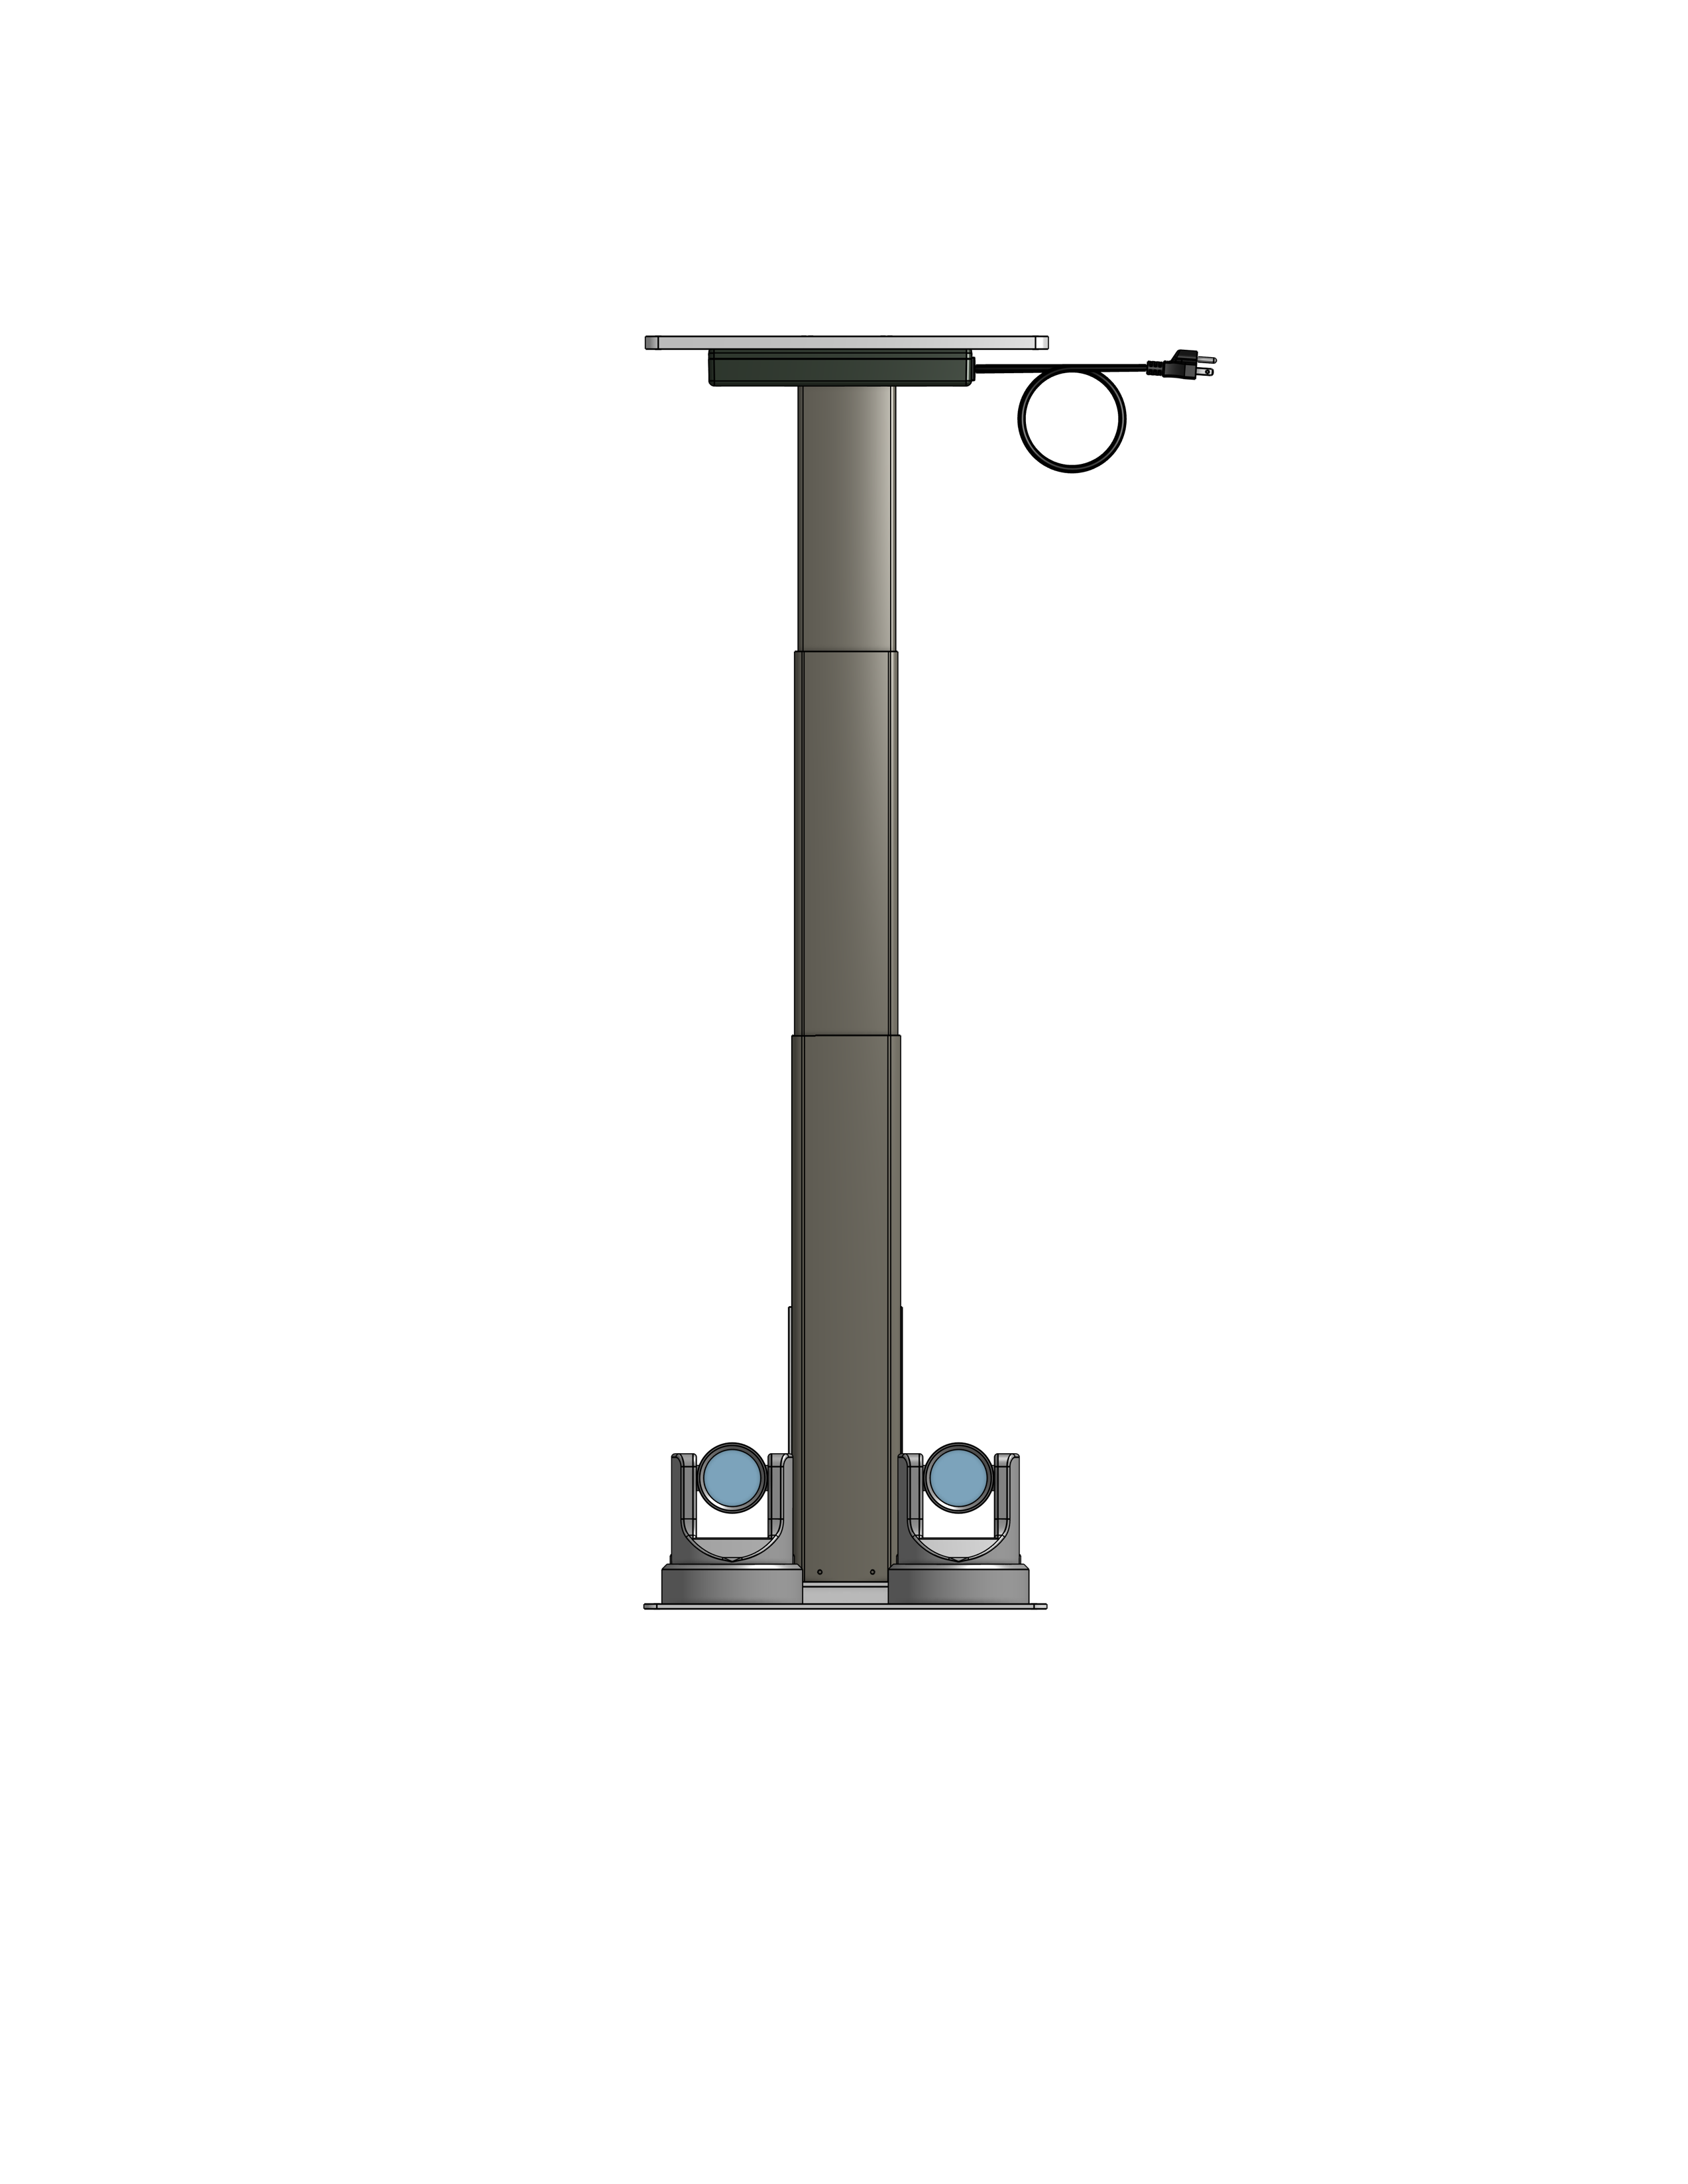 Dual PTZ Camera Lift - Ceiling Mounted  - Travel: 26.5 Inches - Model DAPTZ-24-26.5